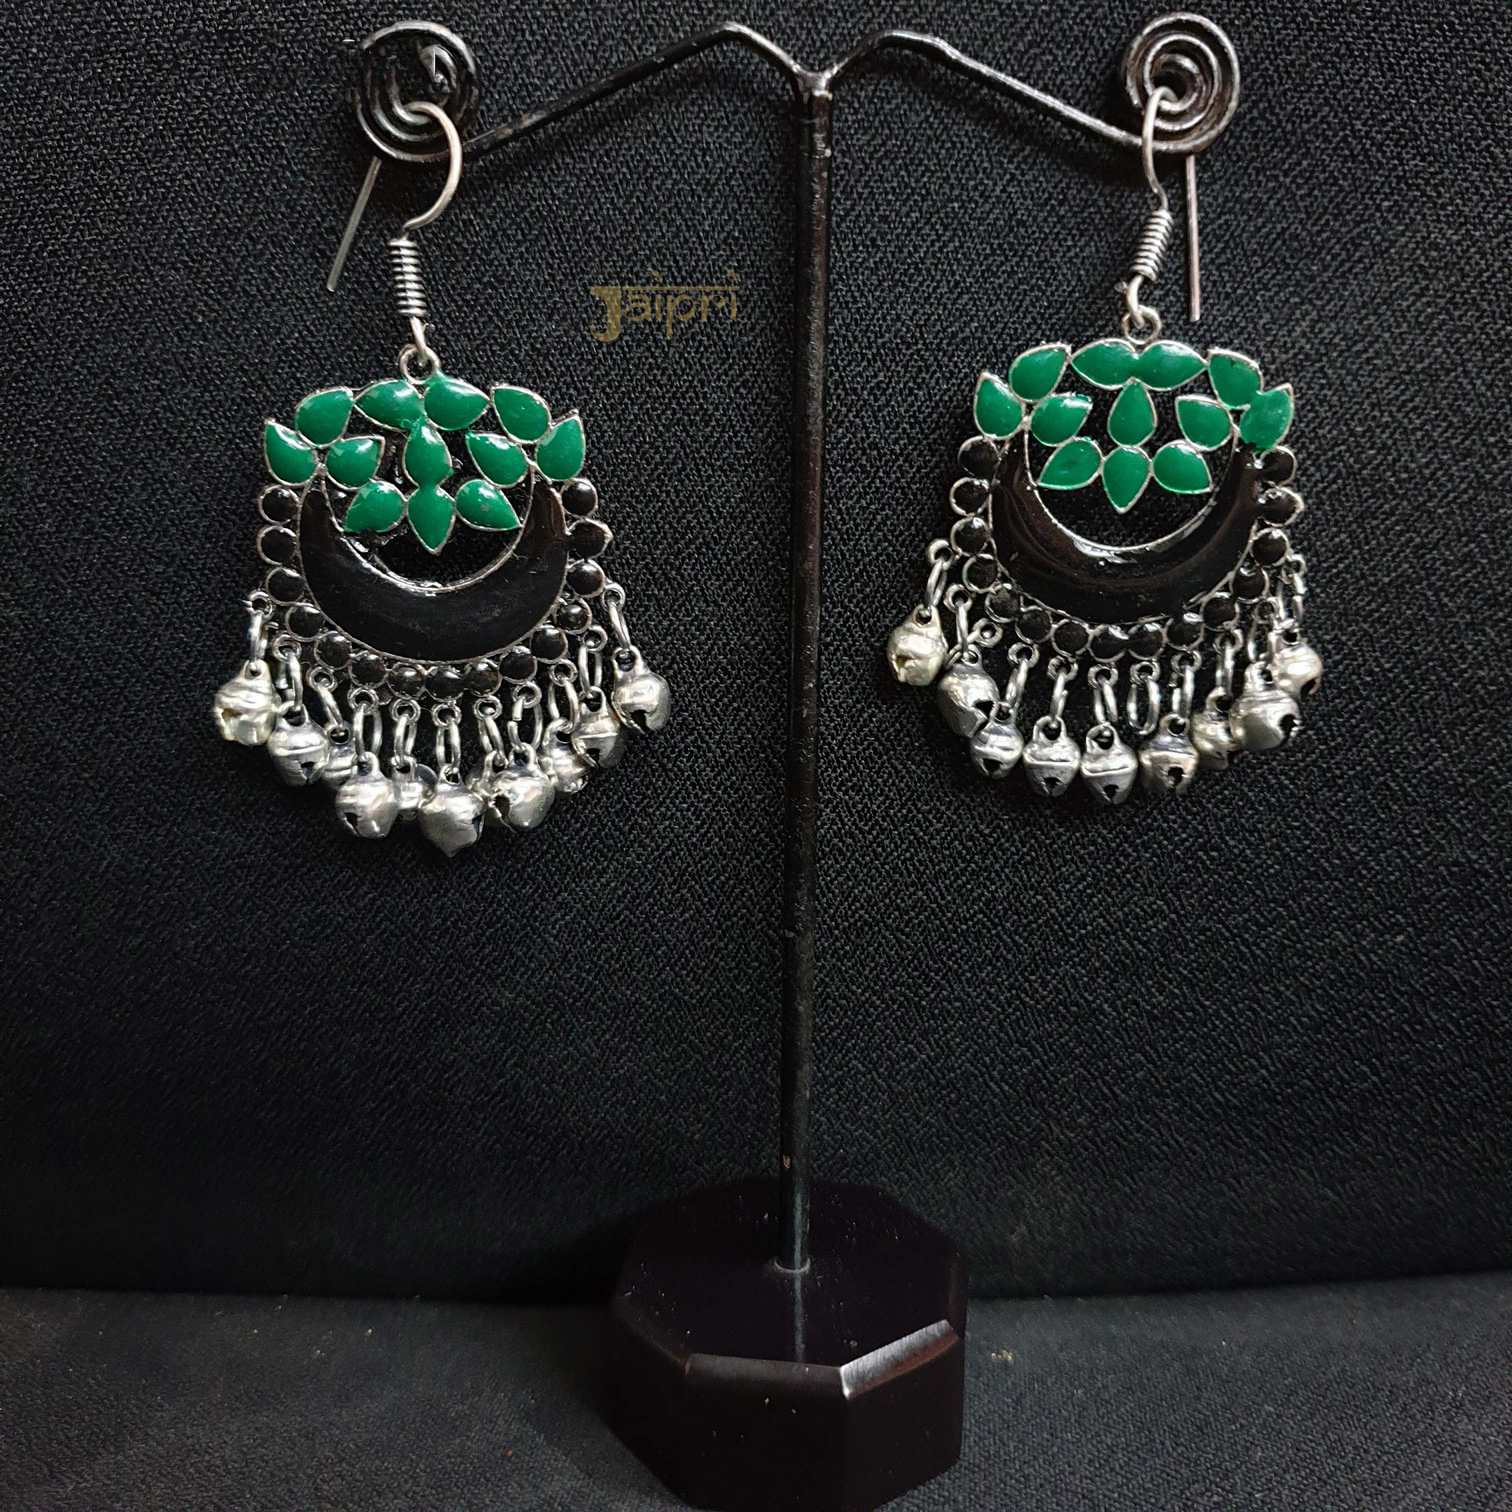 Green & Black Chandbali Hoops Earrings